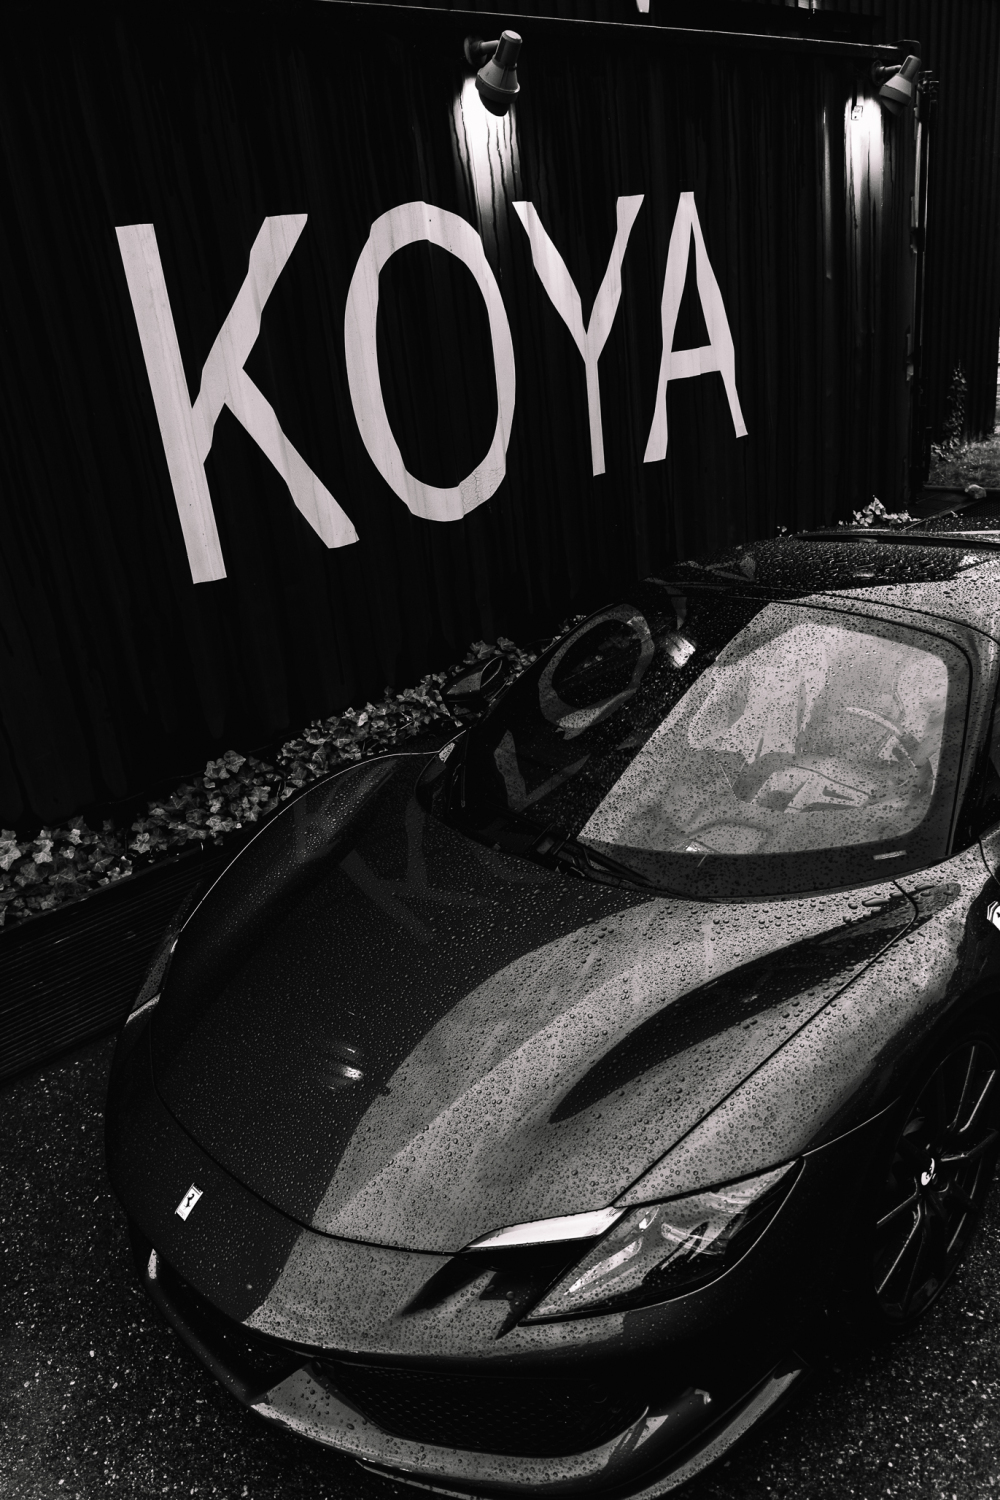 A Ferrari in front of Koya. 